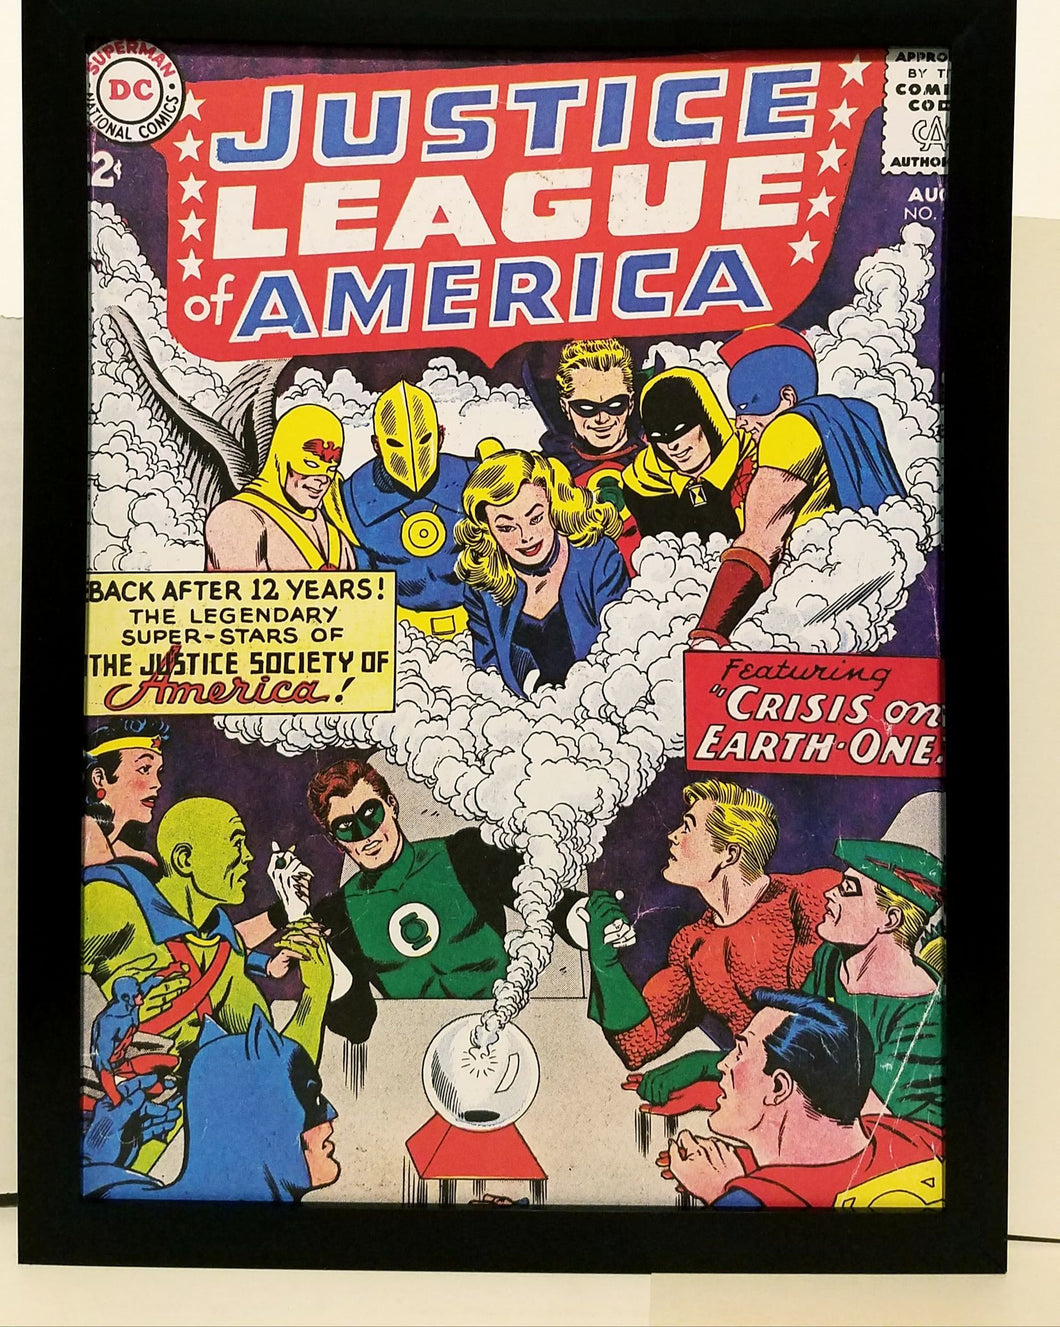 Justice League of America #21 9x12 FRAMED Vintage 1963 DC Comics Art Print Poster